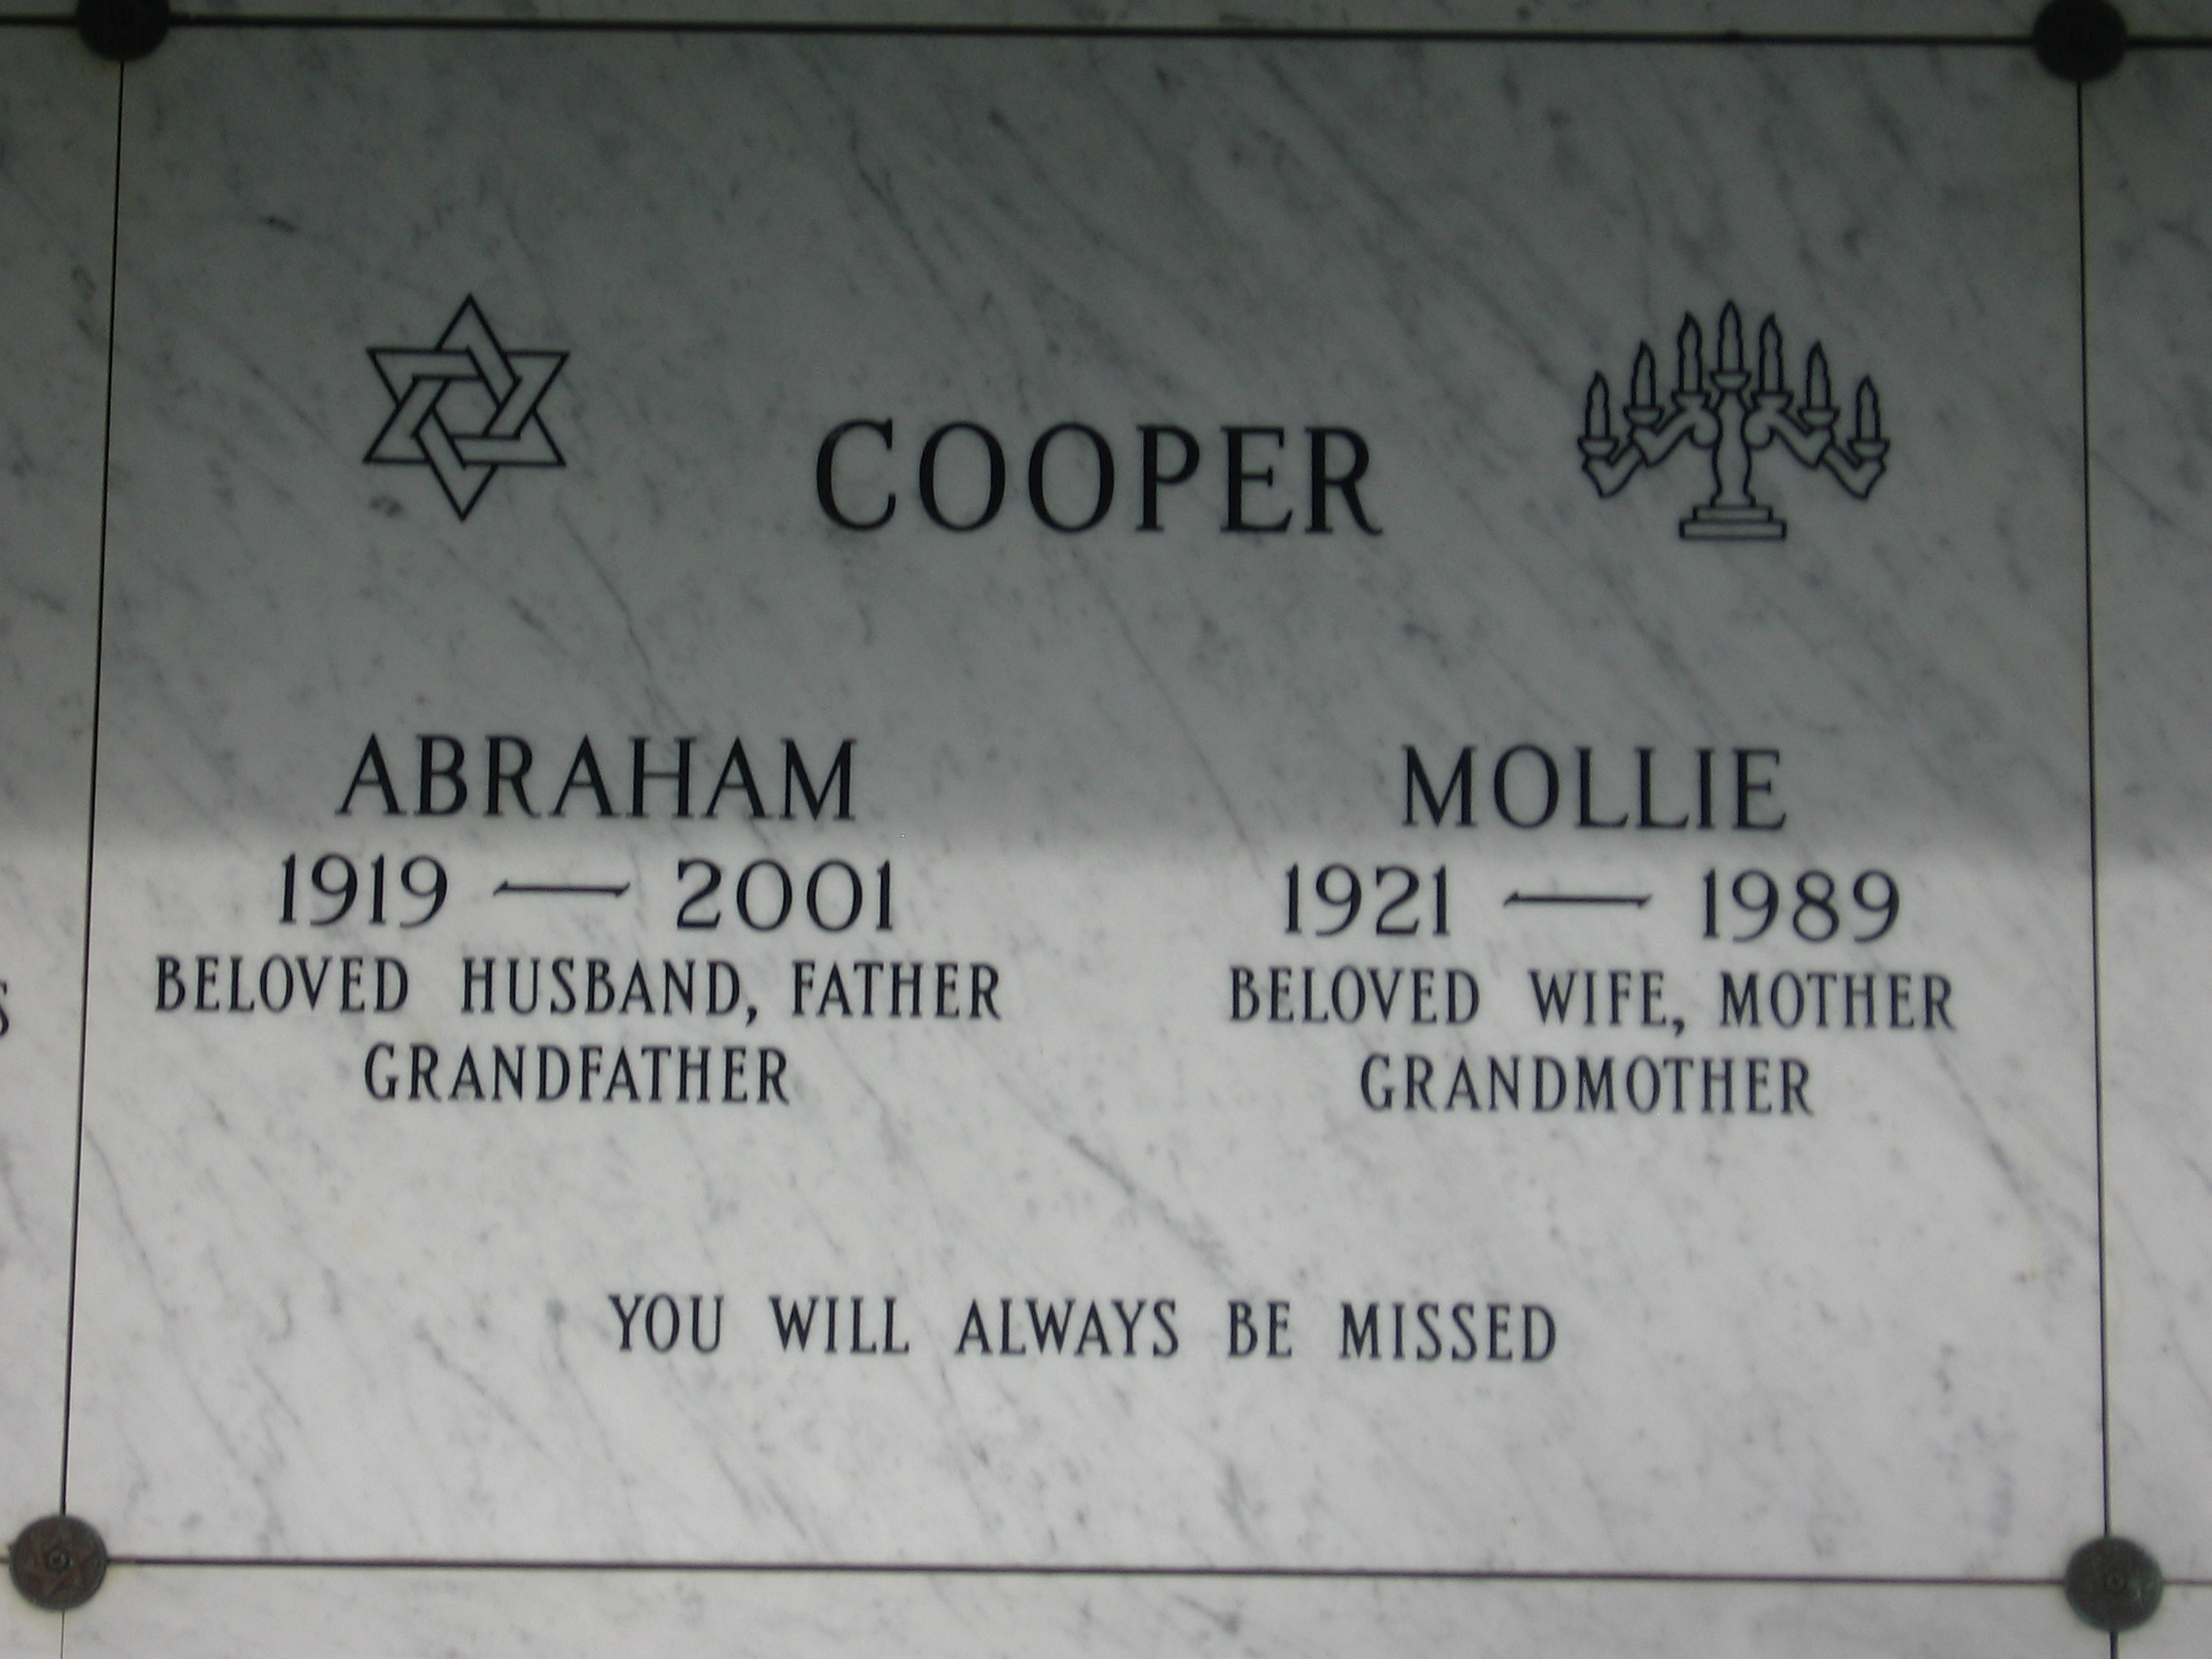 Abraham Cooper